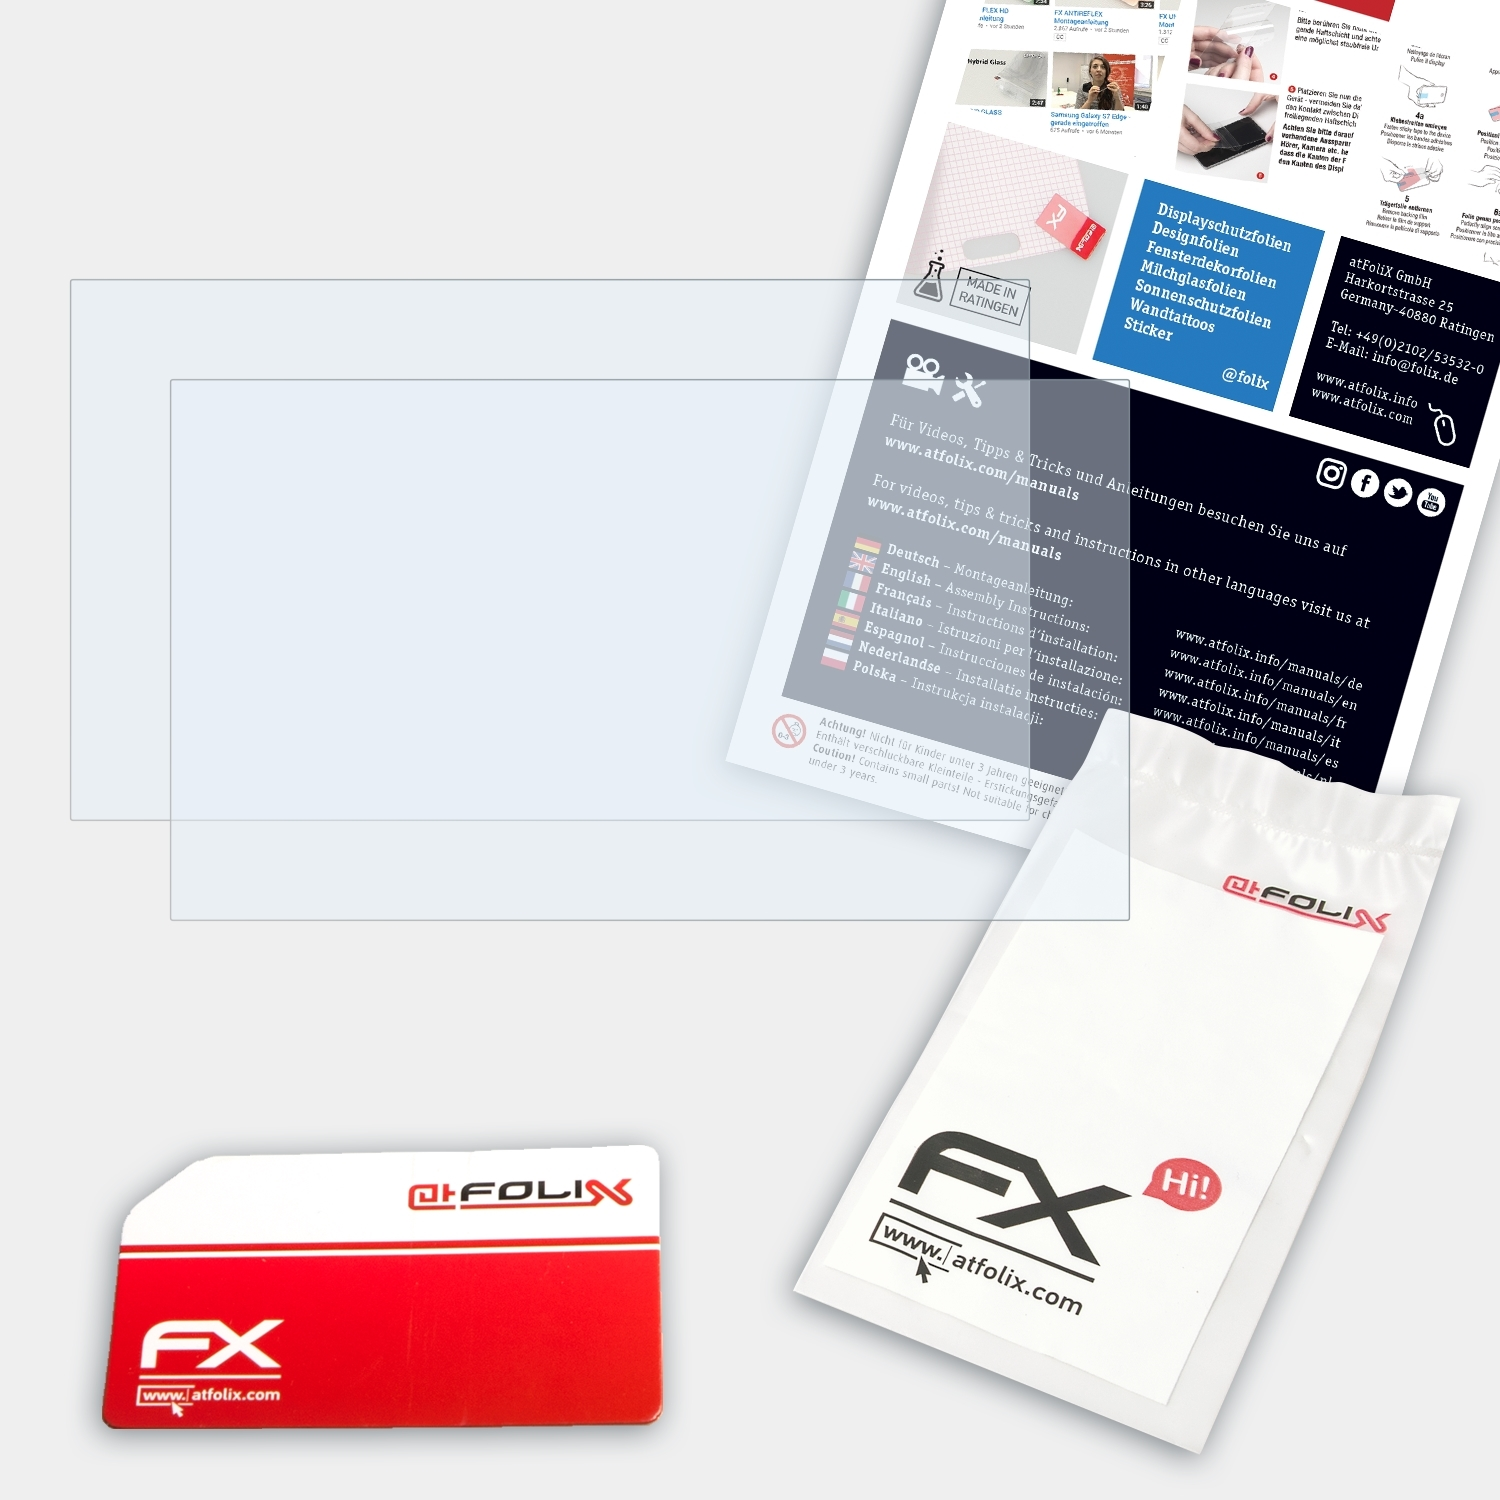 ATFOLIX 2x FX-Clear Displayschutz(für HP Notebook 14-cf1300ng)